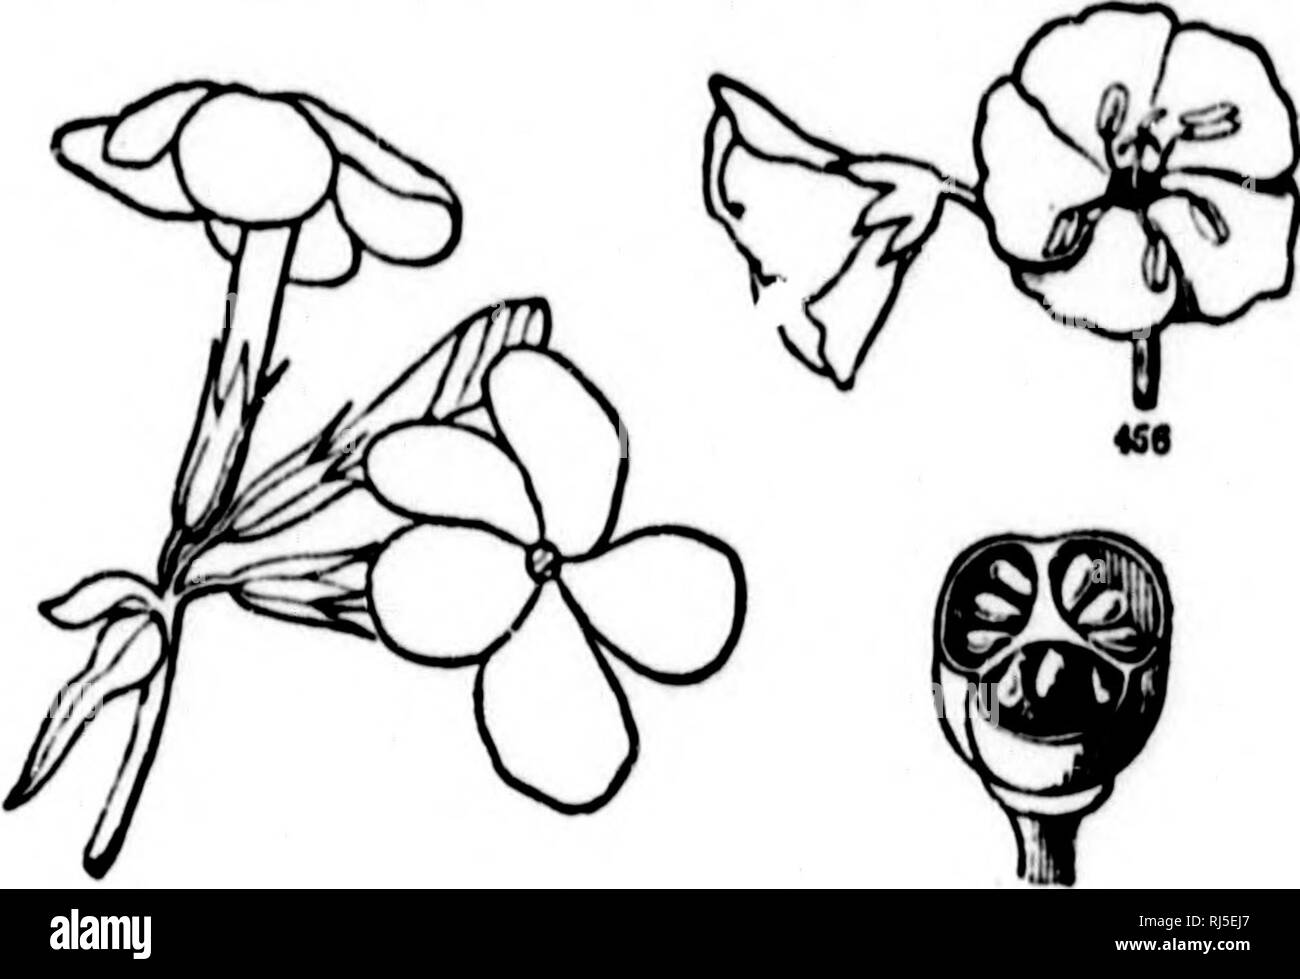 . How plants grow [microform] : a simple introduction to structural botany with a popular flora, or an arrangement and description of common plants, both wild and cultivated. Botany; Ferns; Botanique; Fougères. miTLAH ri.oKA. icS; i 66. POLEMONIUM FAMILY. Or.l.r I'oiJ-MoMACK.K Ili-rlts. iKit twhiiii;^ (l)iit Colwa tlinilH In* t»'n&lt;liils), with iv^Milar flnwi-is, all tlM'jtart-' in fives, cxi'-jit the i»istil wliirli is 3-&lt;'t'lK'il uiid tlu- stvle 3-(K'rt at tlio top, tin* 5 sjuvatlin-,' l(i1-t's 111' tlif vtniti|tiii;4Mi tliat oihmmIj^i' nfi-arli is (nitsidf of tliat licliiml it, I'li Stock Photo